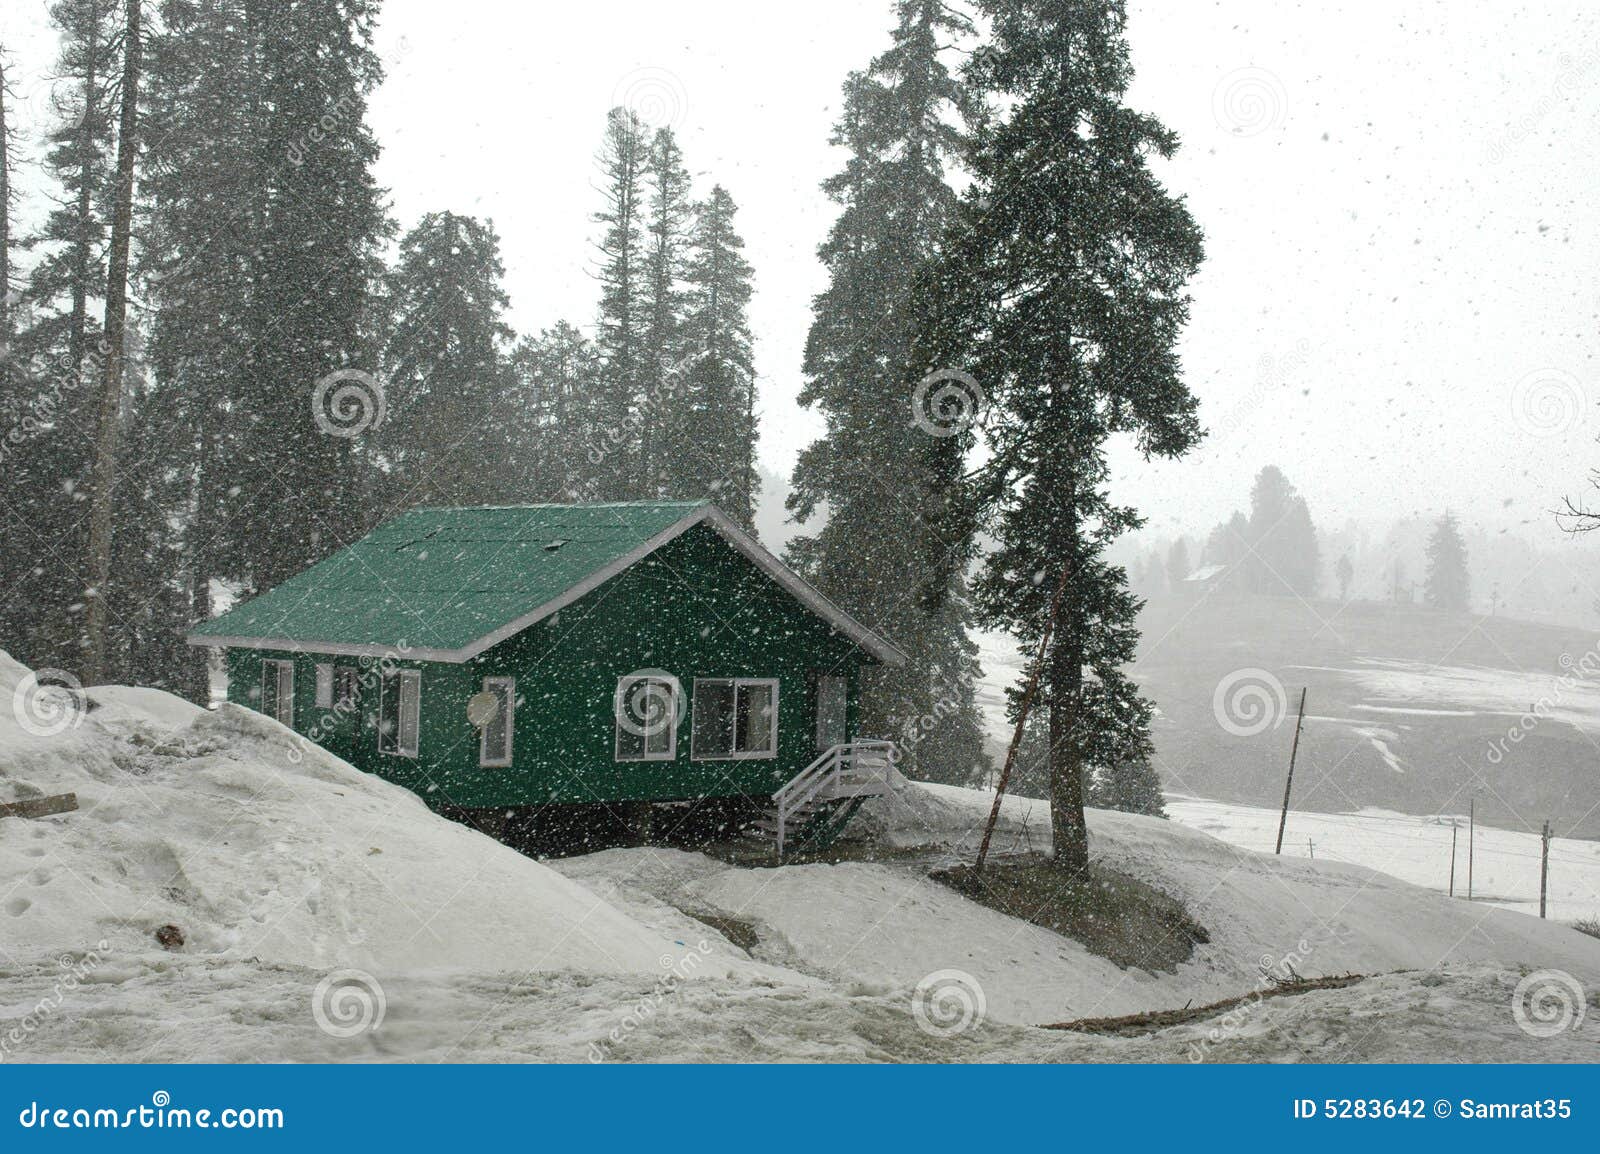 snowfalls at kashmir